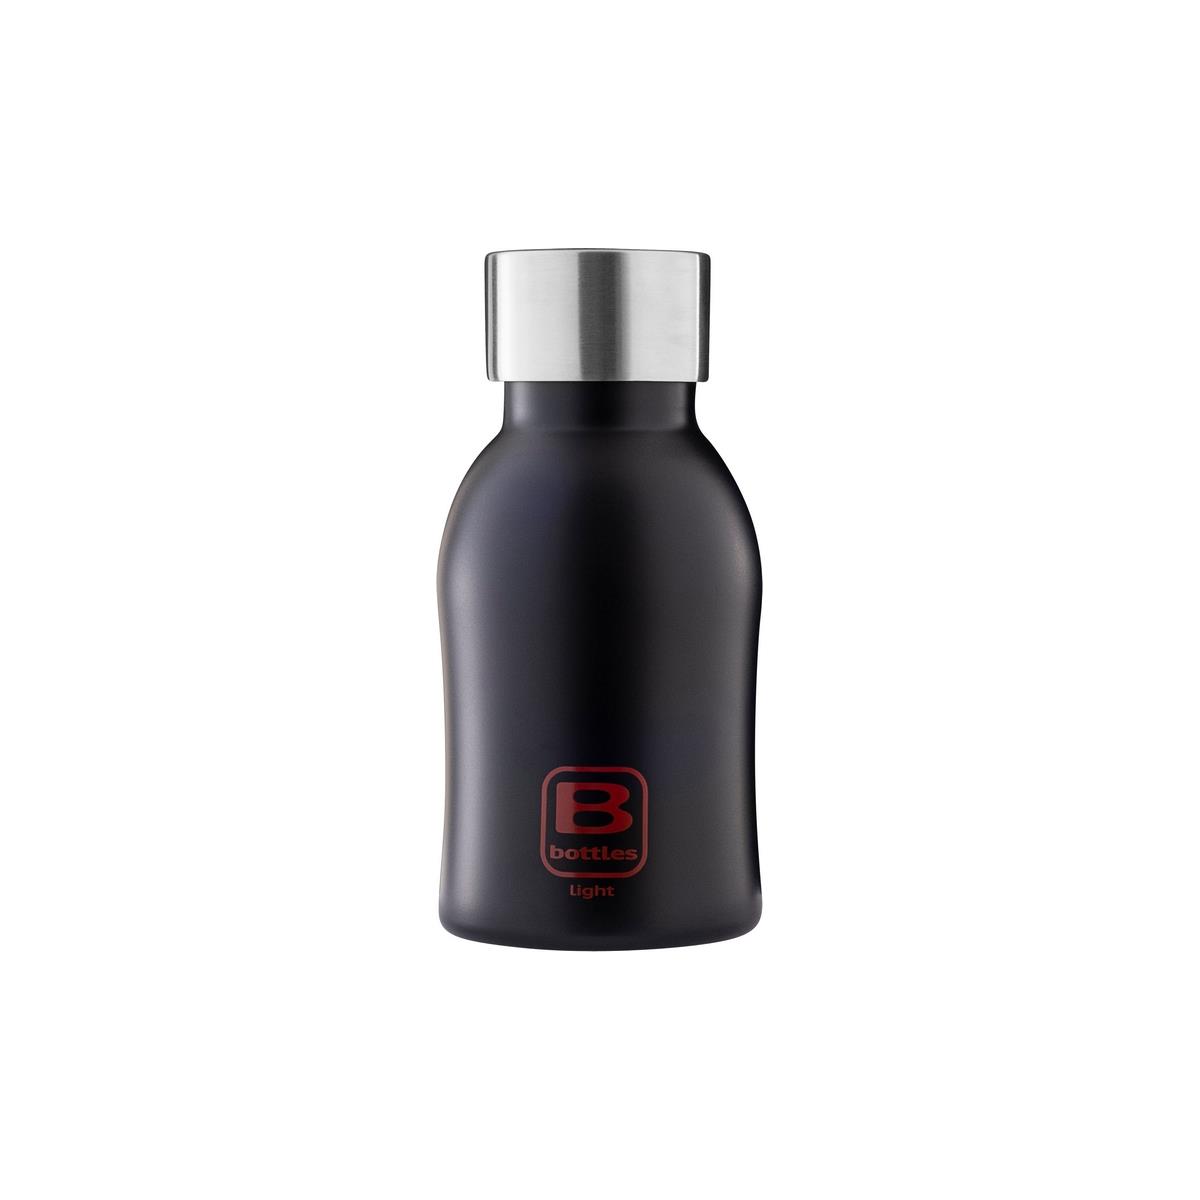 photo B Bottles Light - Nero Opaco - 350 ml - Bottiglia in acciaio inox 18/10 ultra leggera e compatta